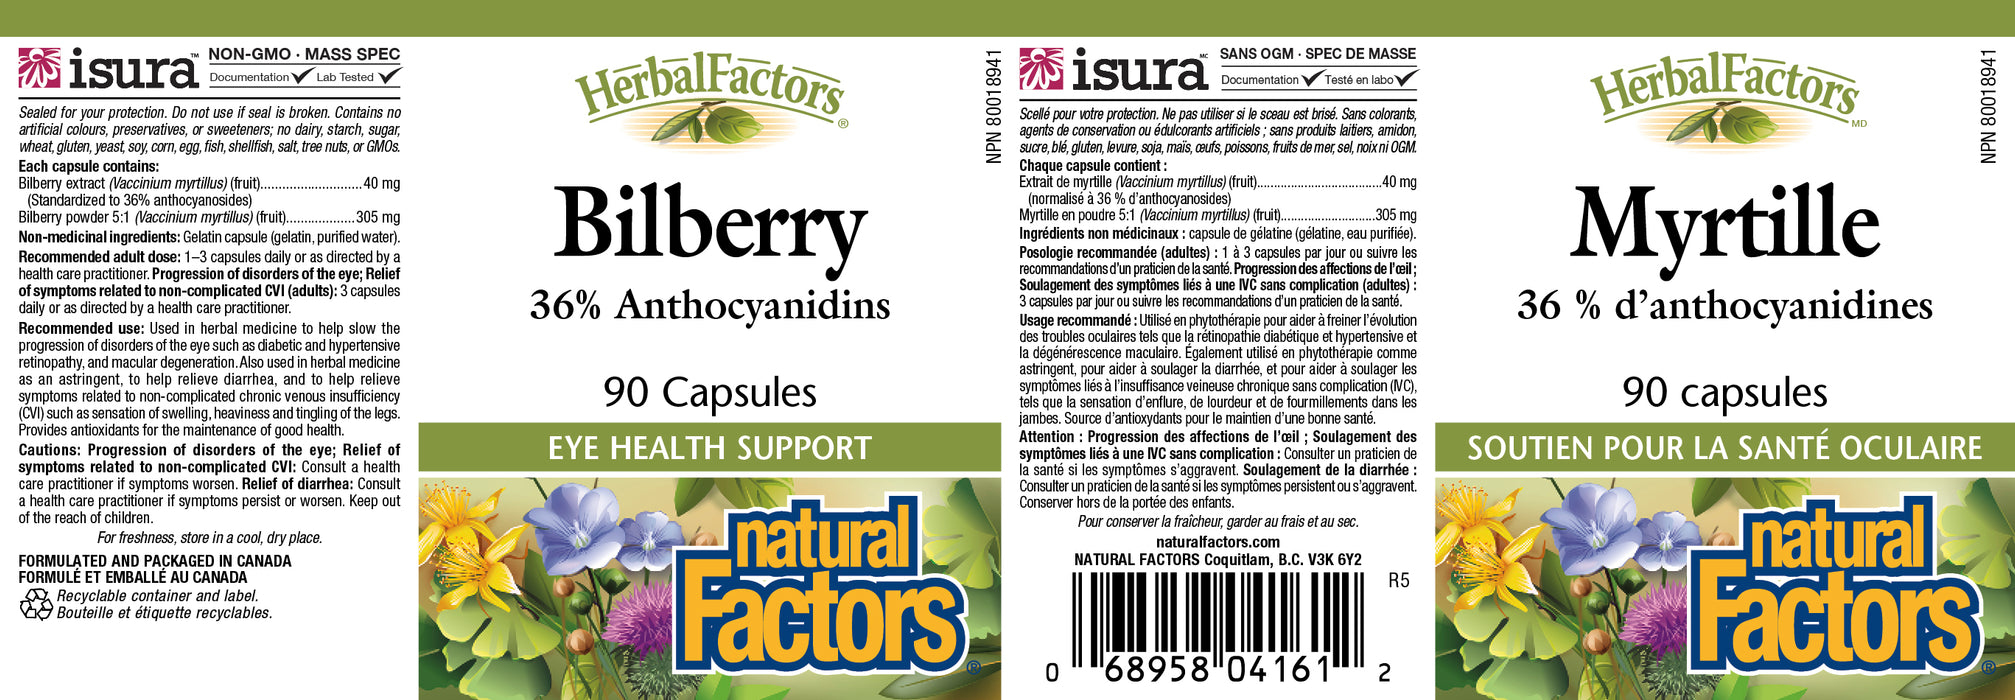 Natural Factots HerbalFactors Bilberry